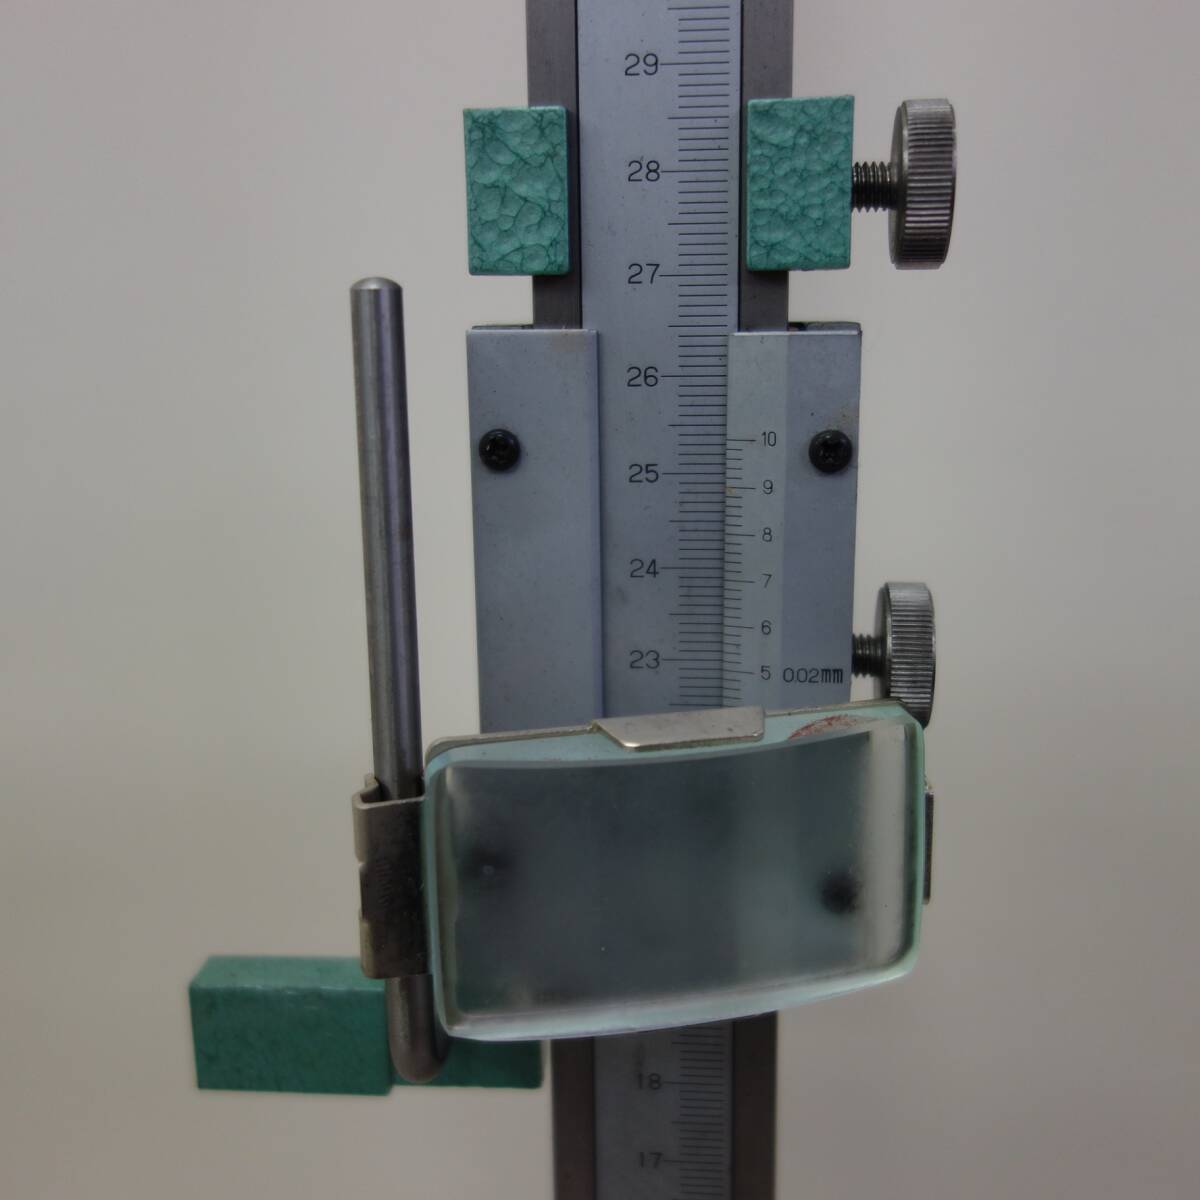 [ free shipping ] *KANON height gauge SHT Ⅲ 30cm 300mm×0.02mm shape standard measurement measurement tool scale ka non Nakamura factory BESTOOL*